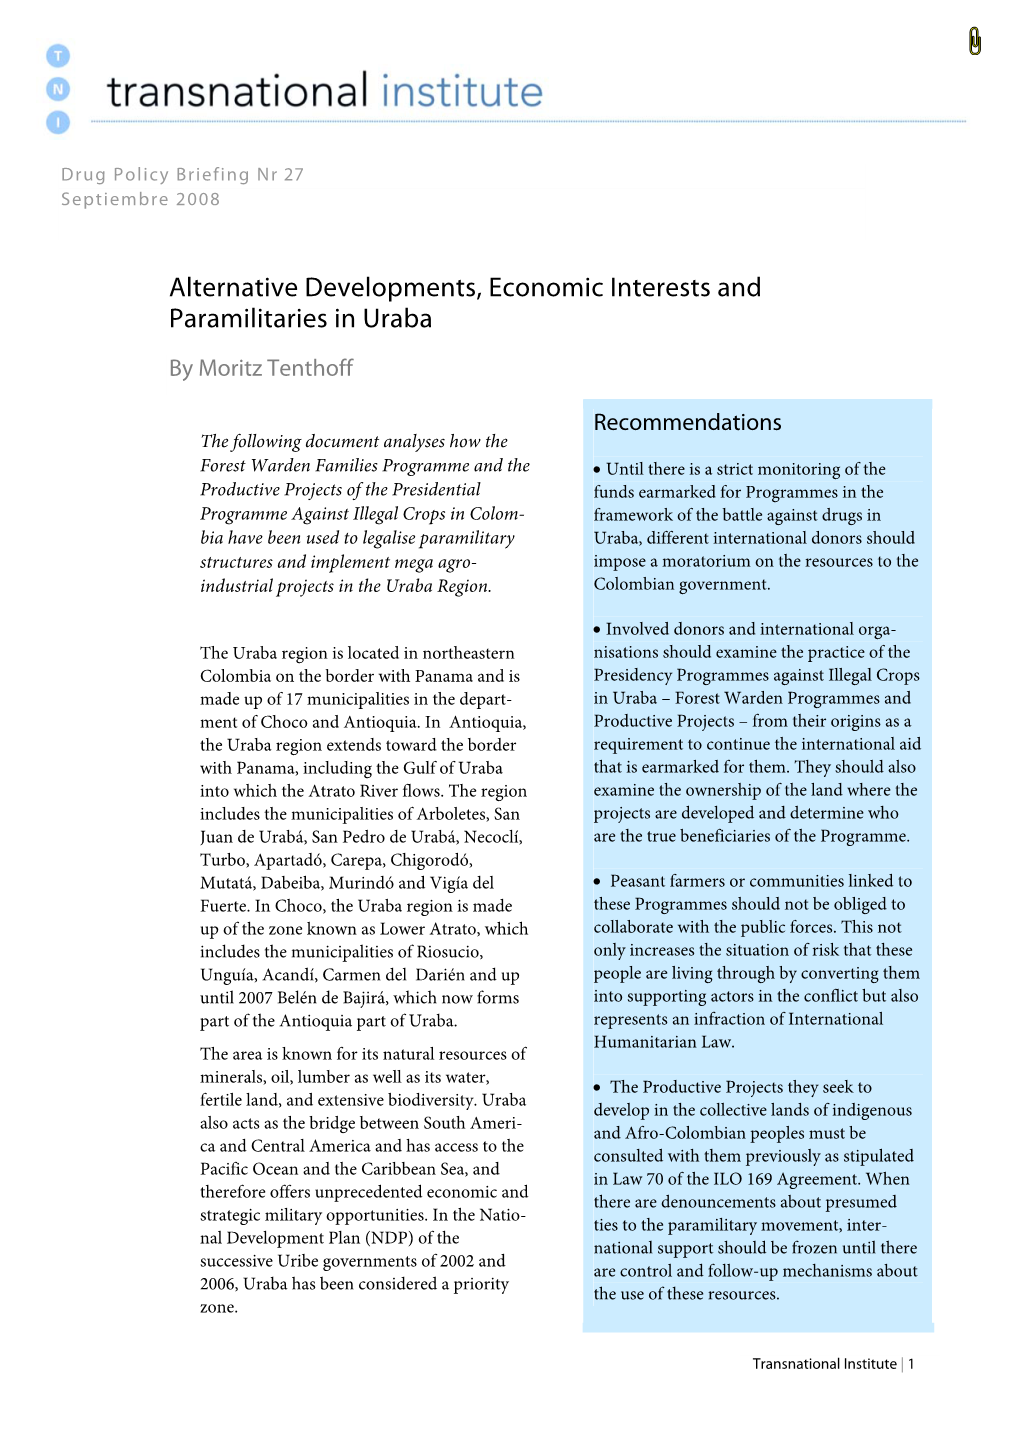 Alternative Developments, Economic Interests and Paramilitaries in Uraba by Moritz Tenthoff